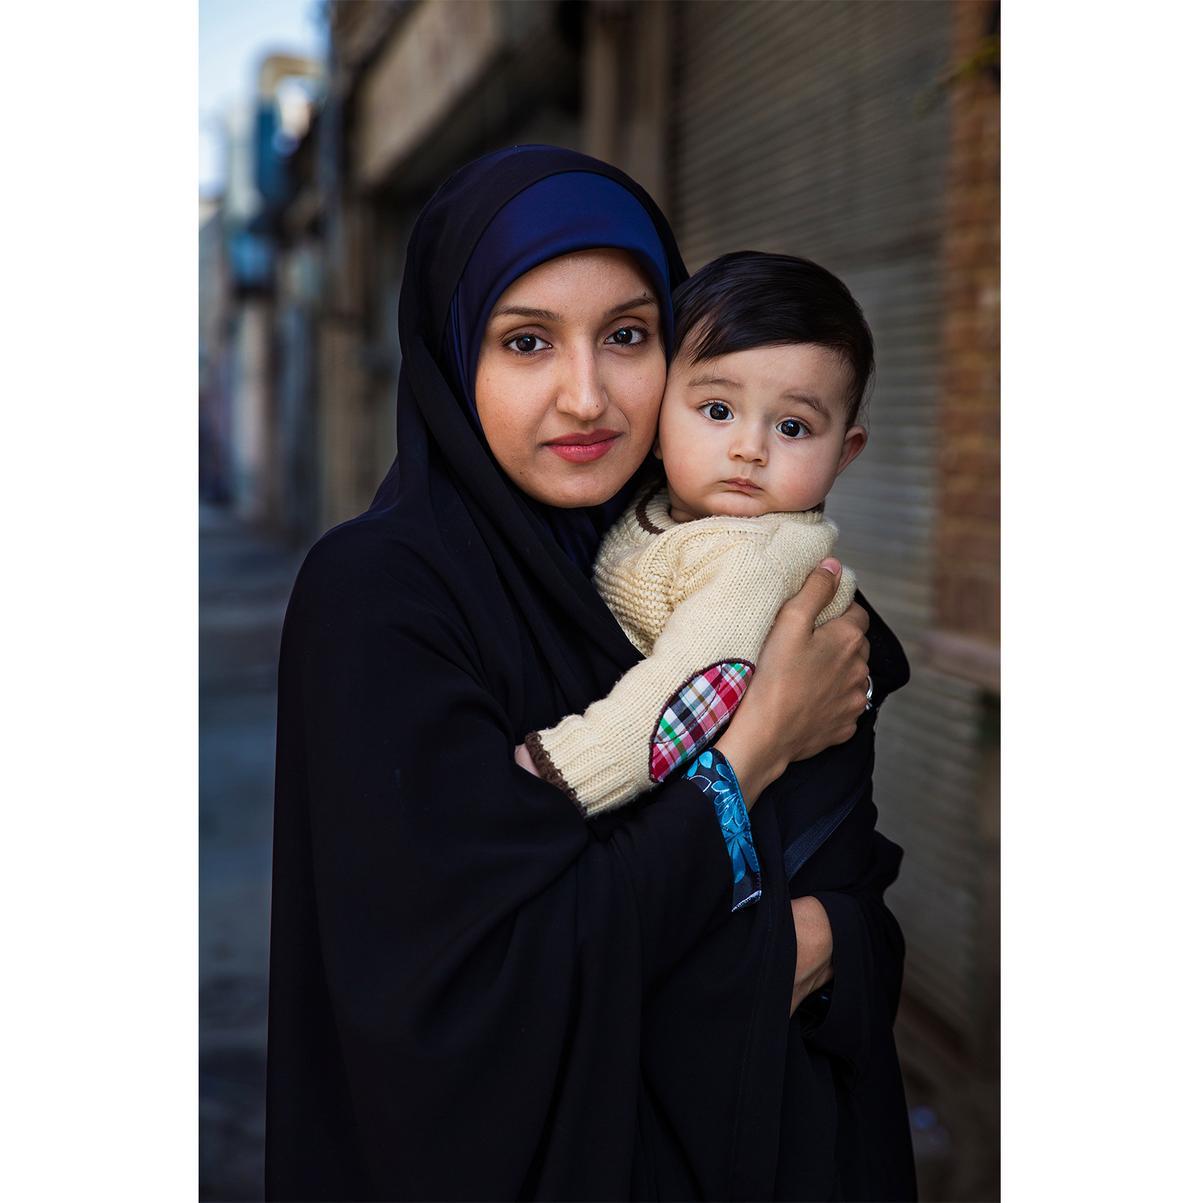 TEHRAN, IRAN, "Leila and her son Abtin" (Courtesy of <a href="https://theatlasofbeauty.com/">Mihaela Noroc</a>)